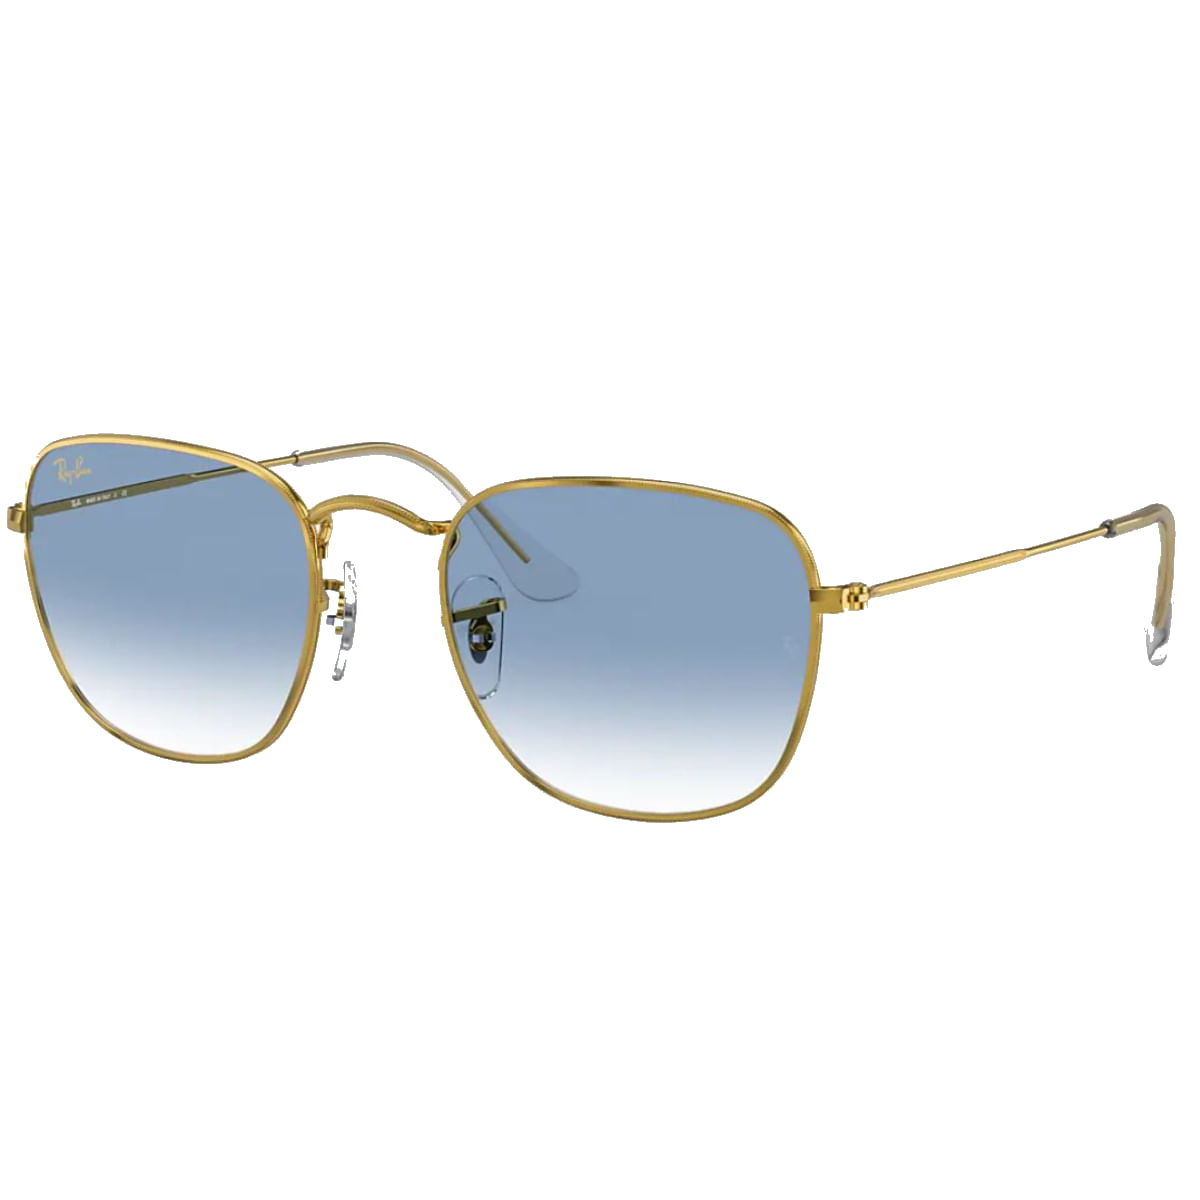 Ray-Ban Frank Antiqued Sunglasses - Bobwards.com